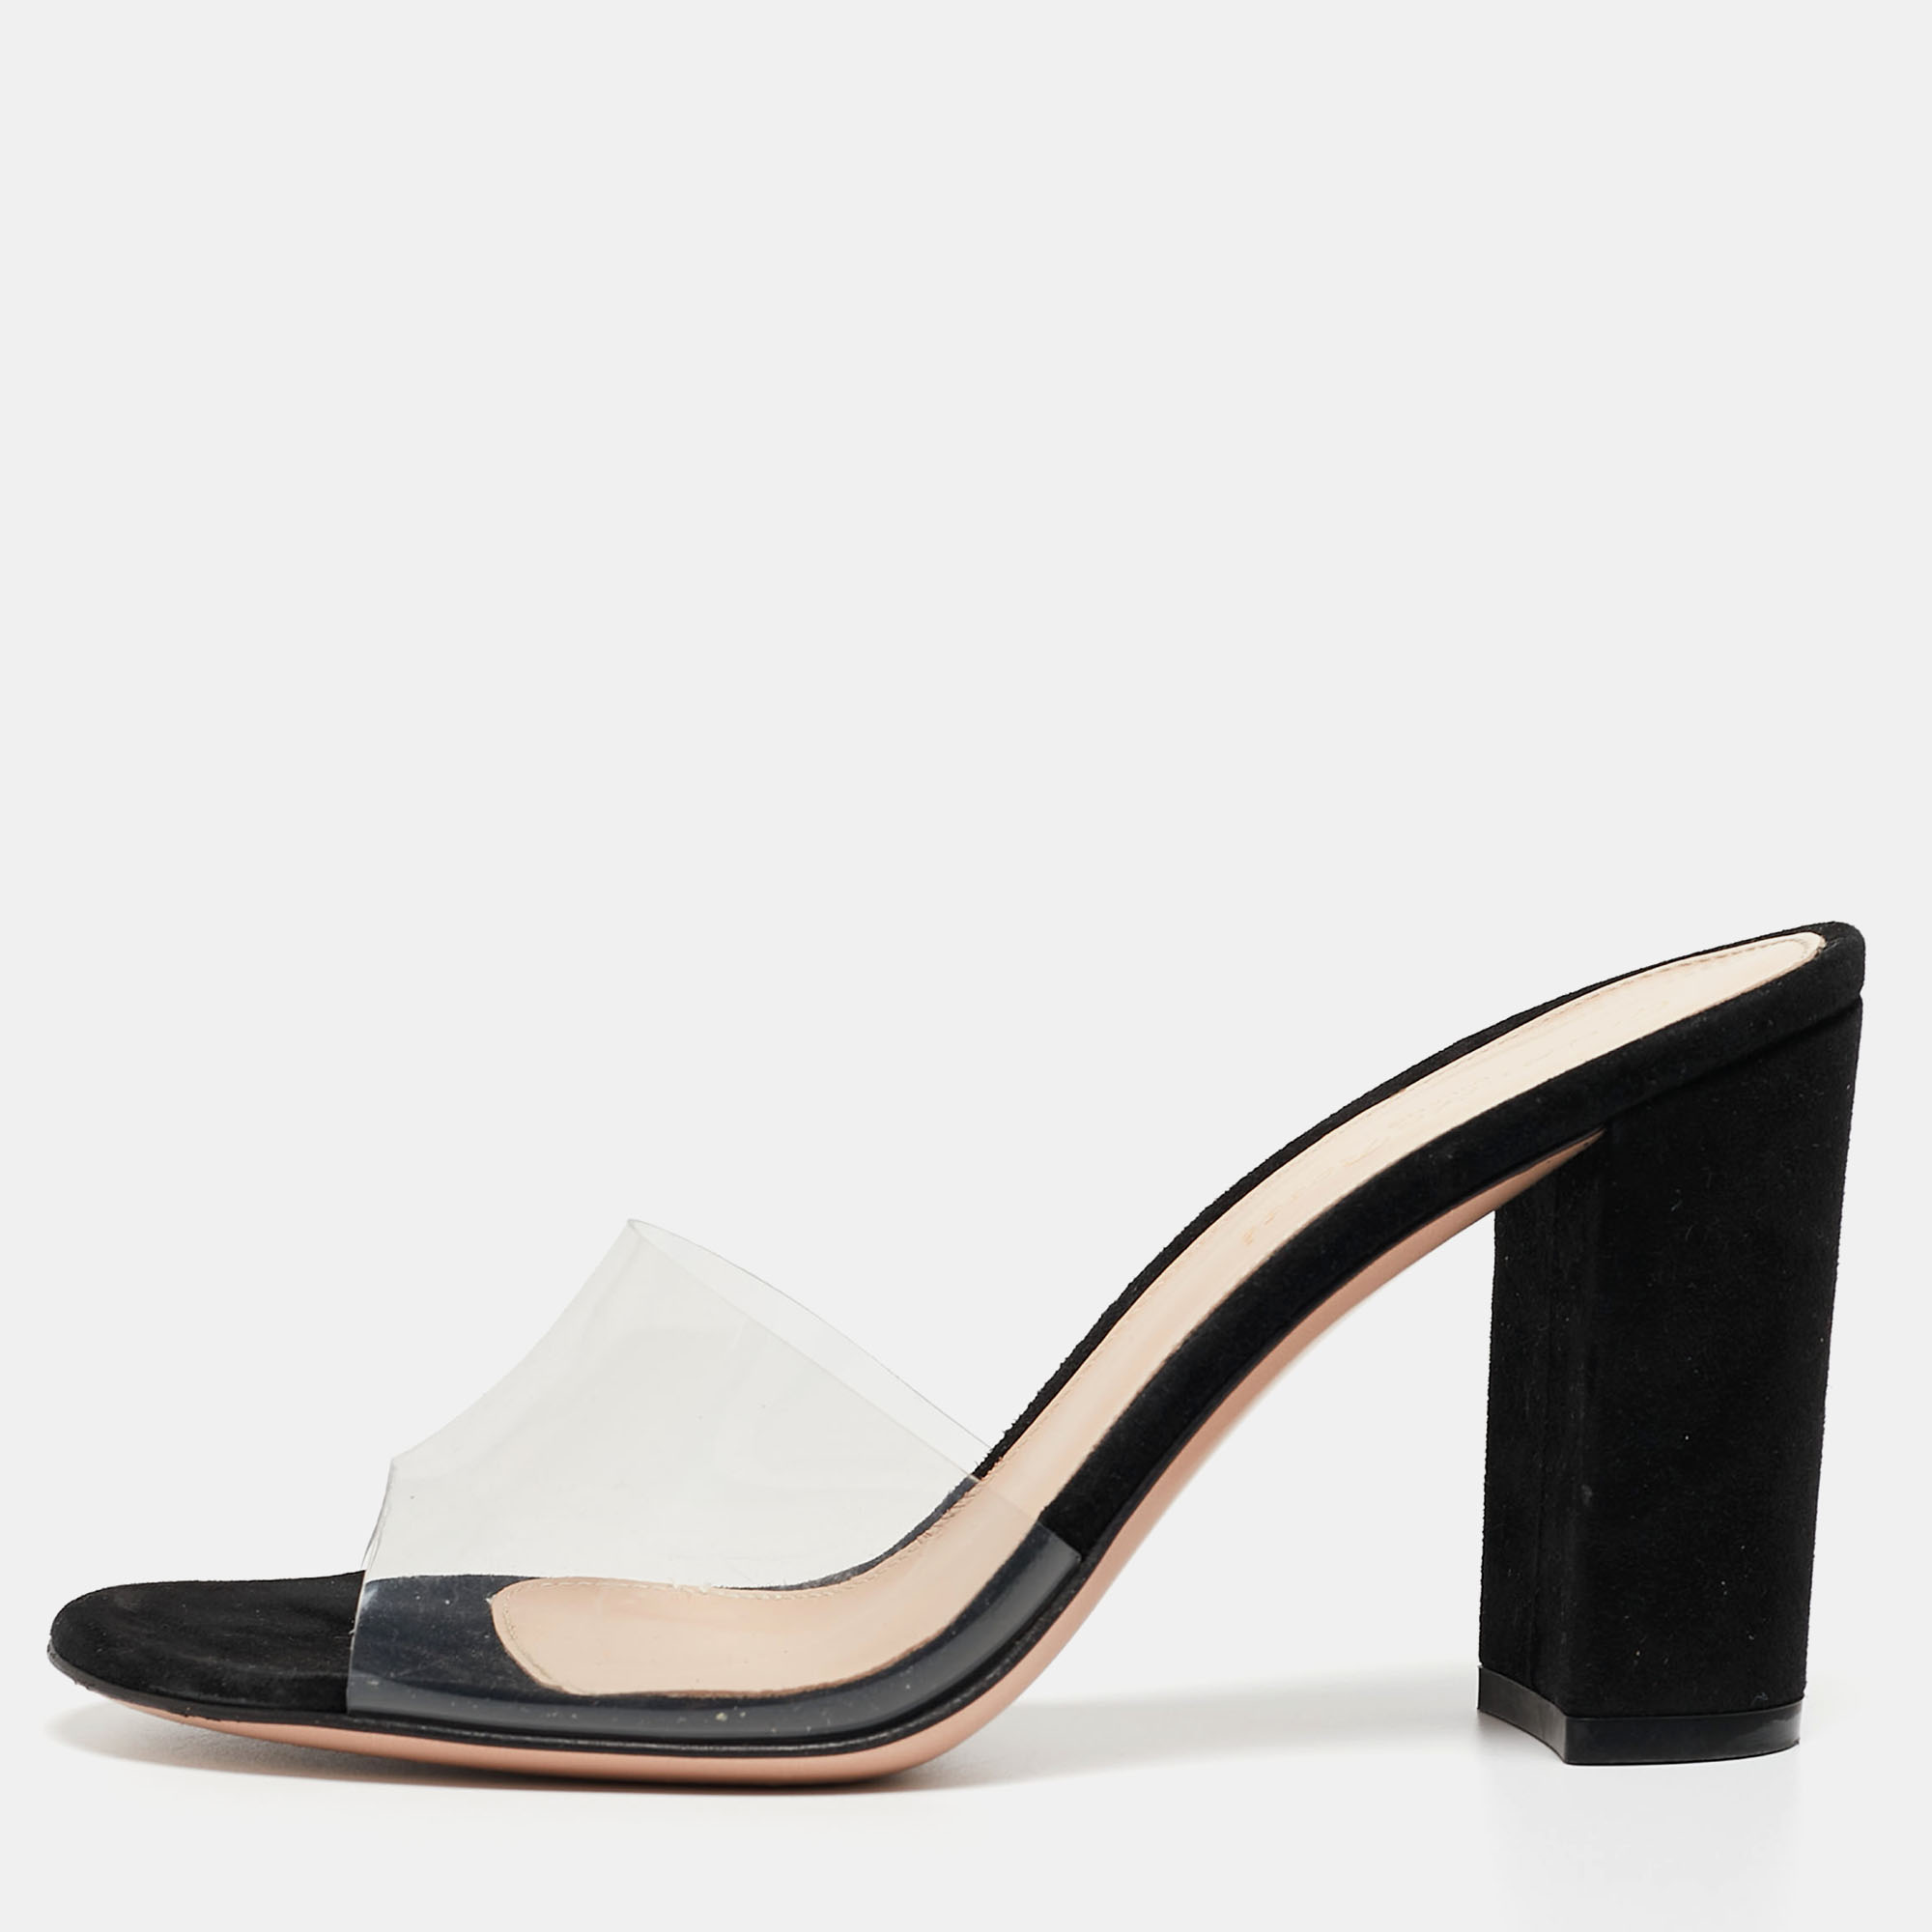 Gianvito rossi black pvc and suede open toe block heel slide sandals size 36